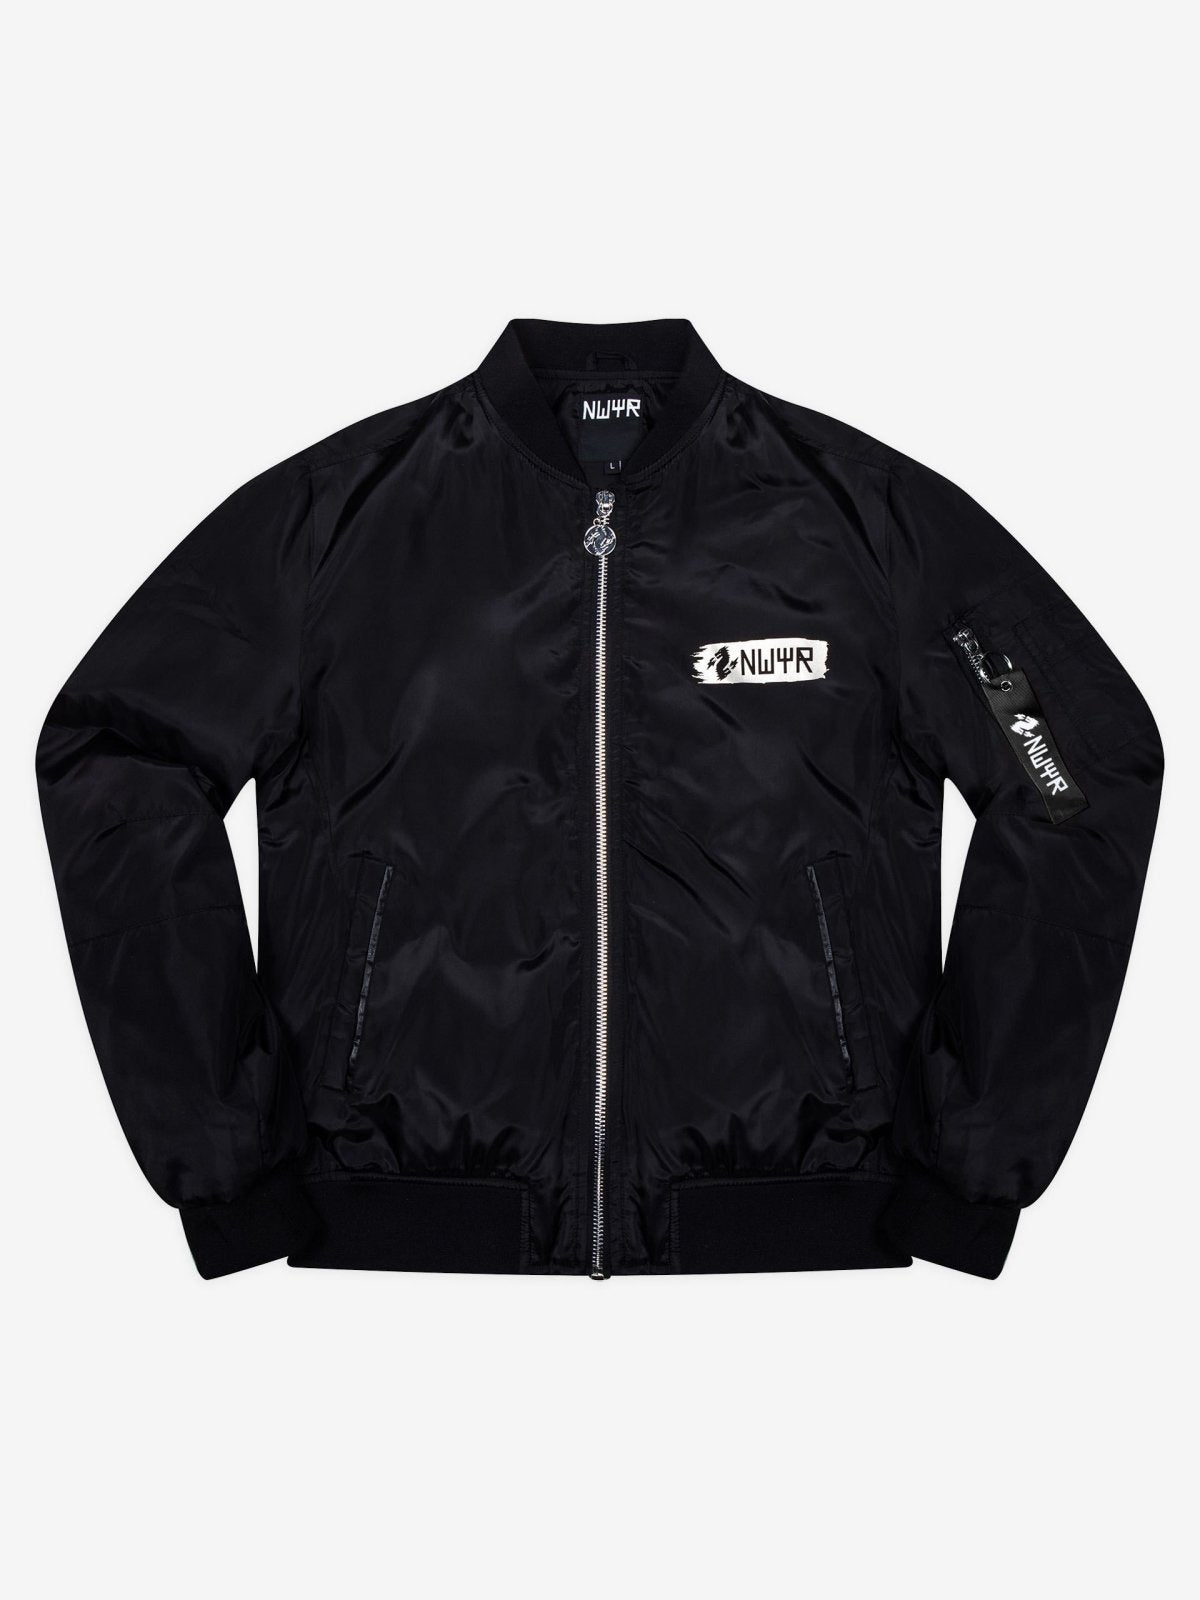 NWYR Bomber Jacket (Black & White) - Rave Culture Shop